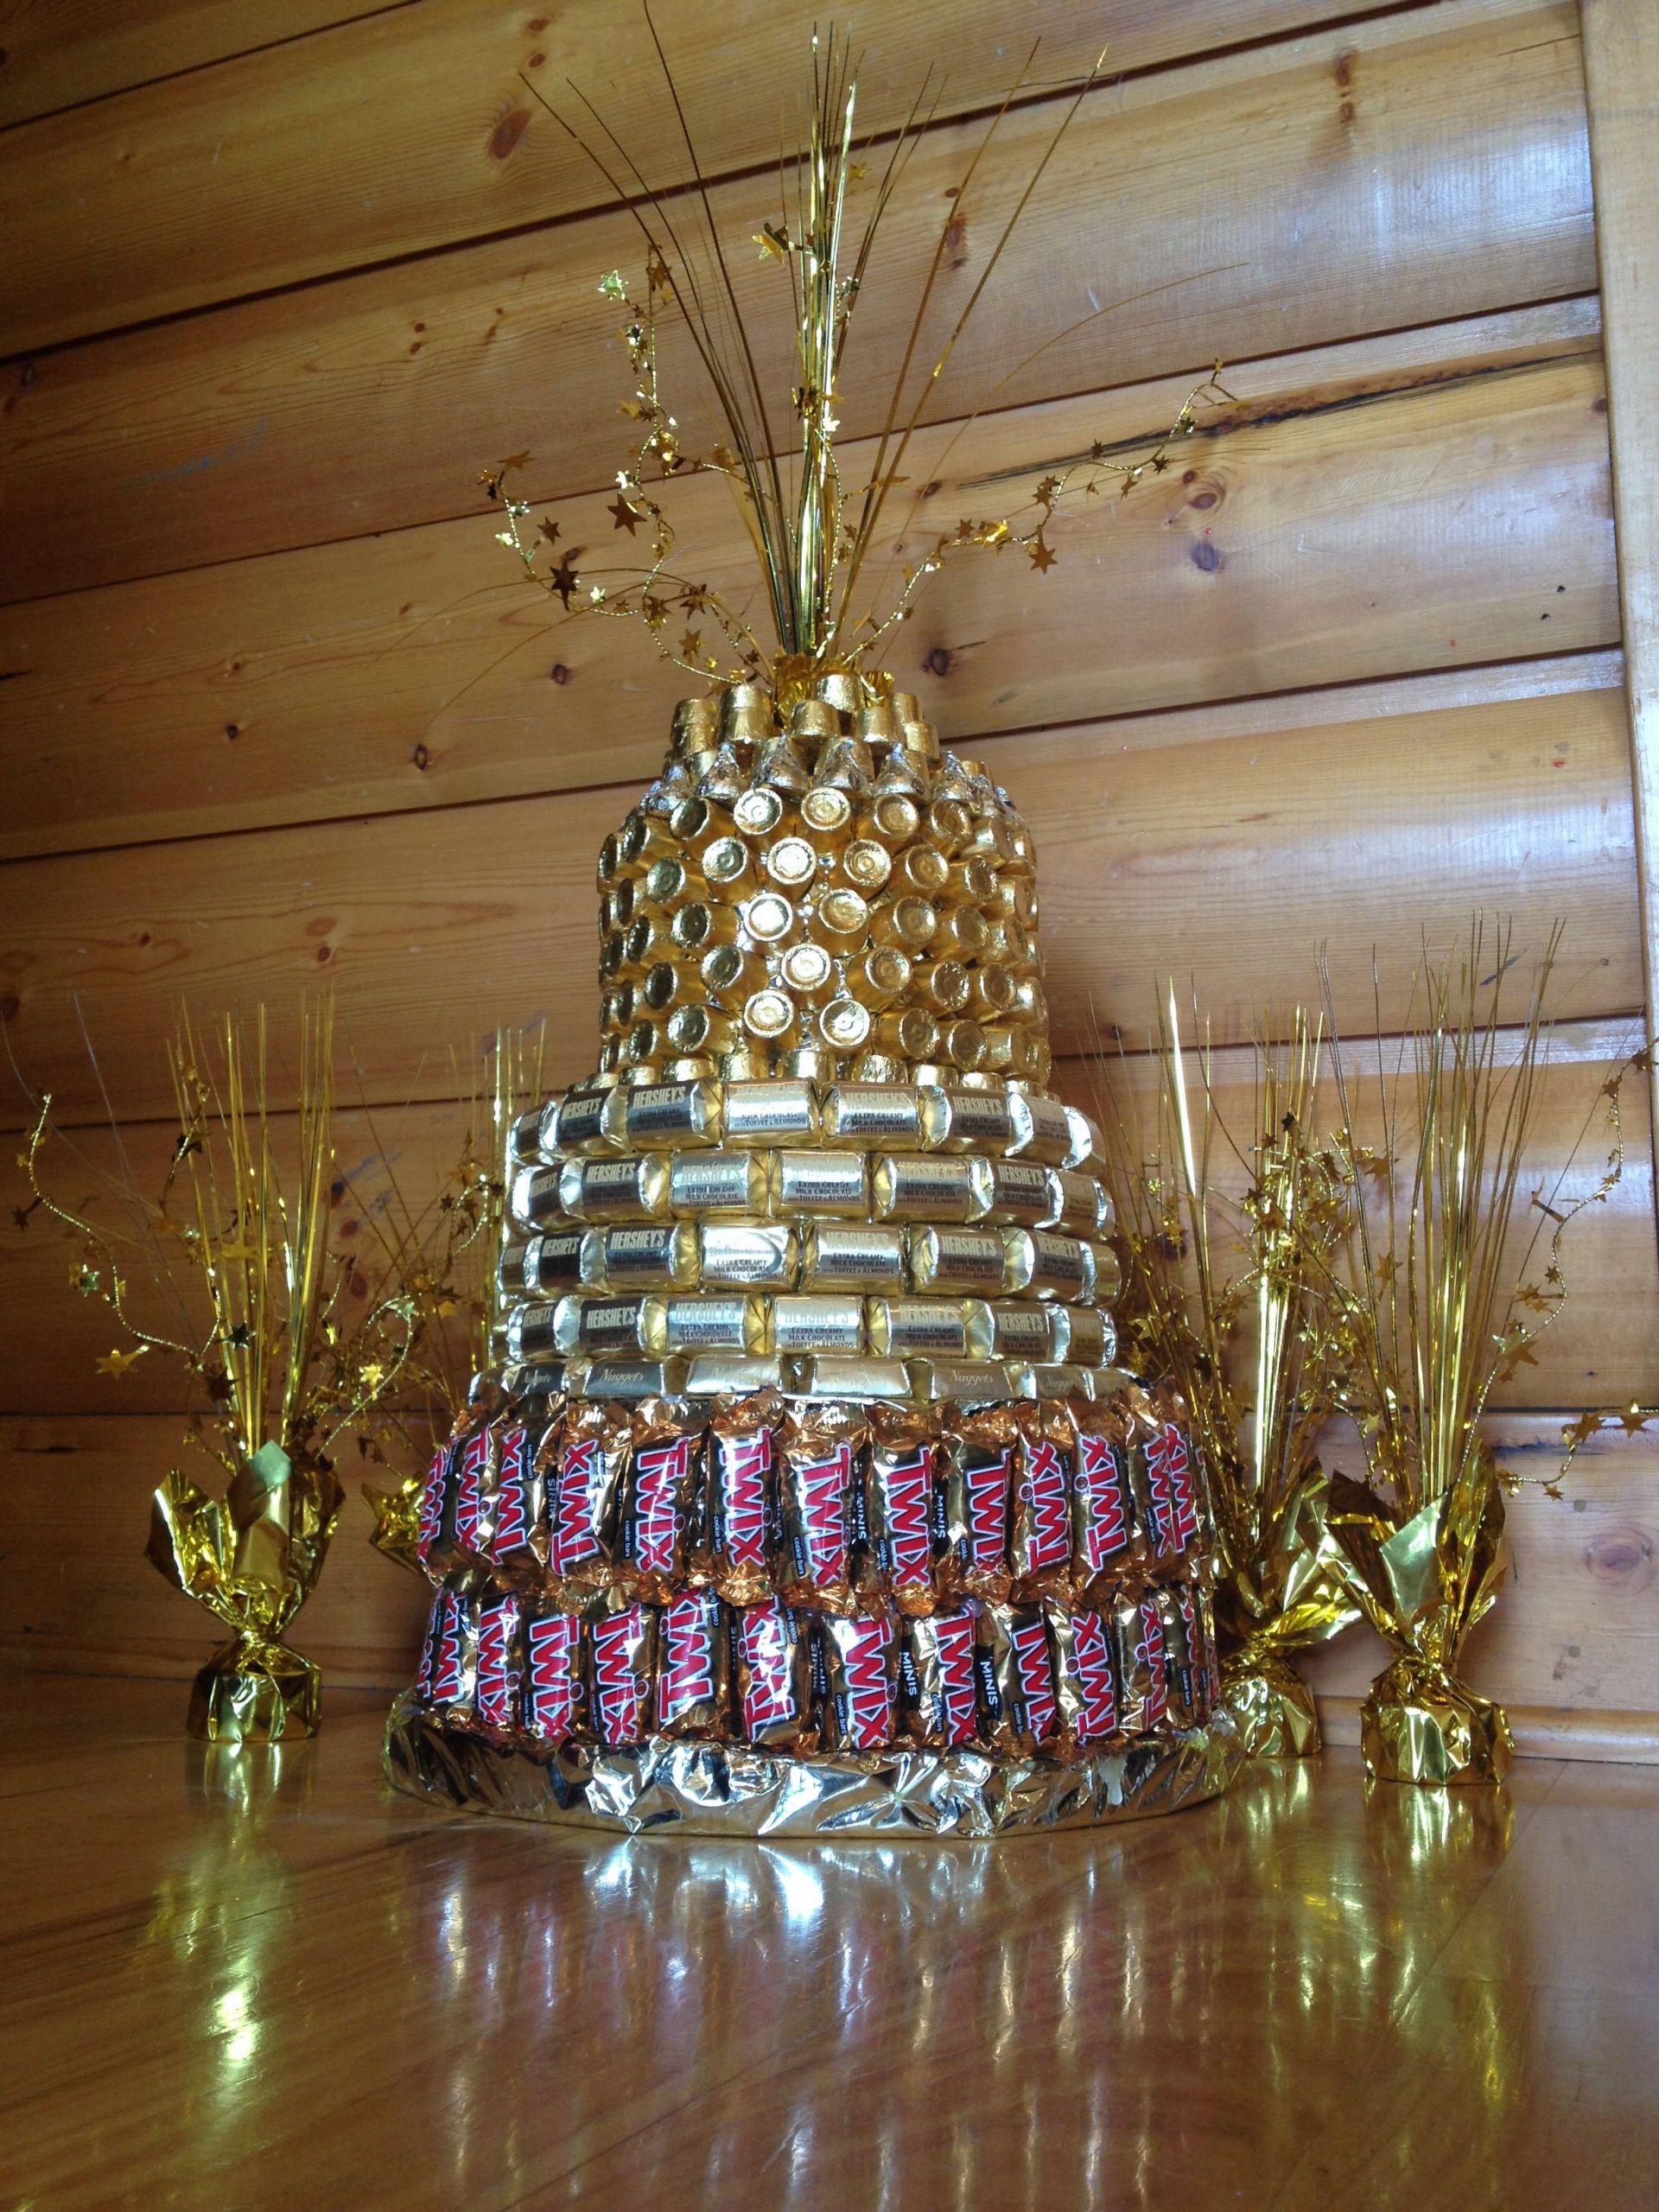 Golden Birthday Cake Ideas
 GOLDEN BIRTHDAY CAKE made from styrofoam and hot glued